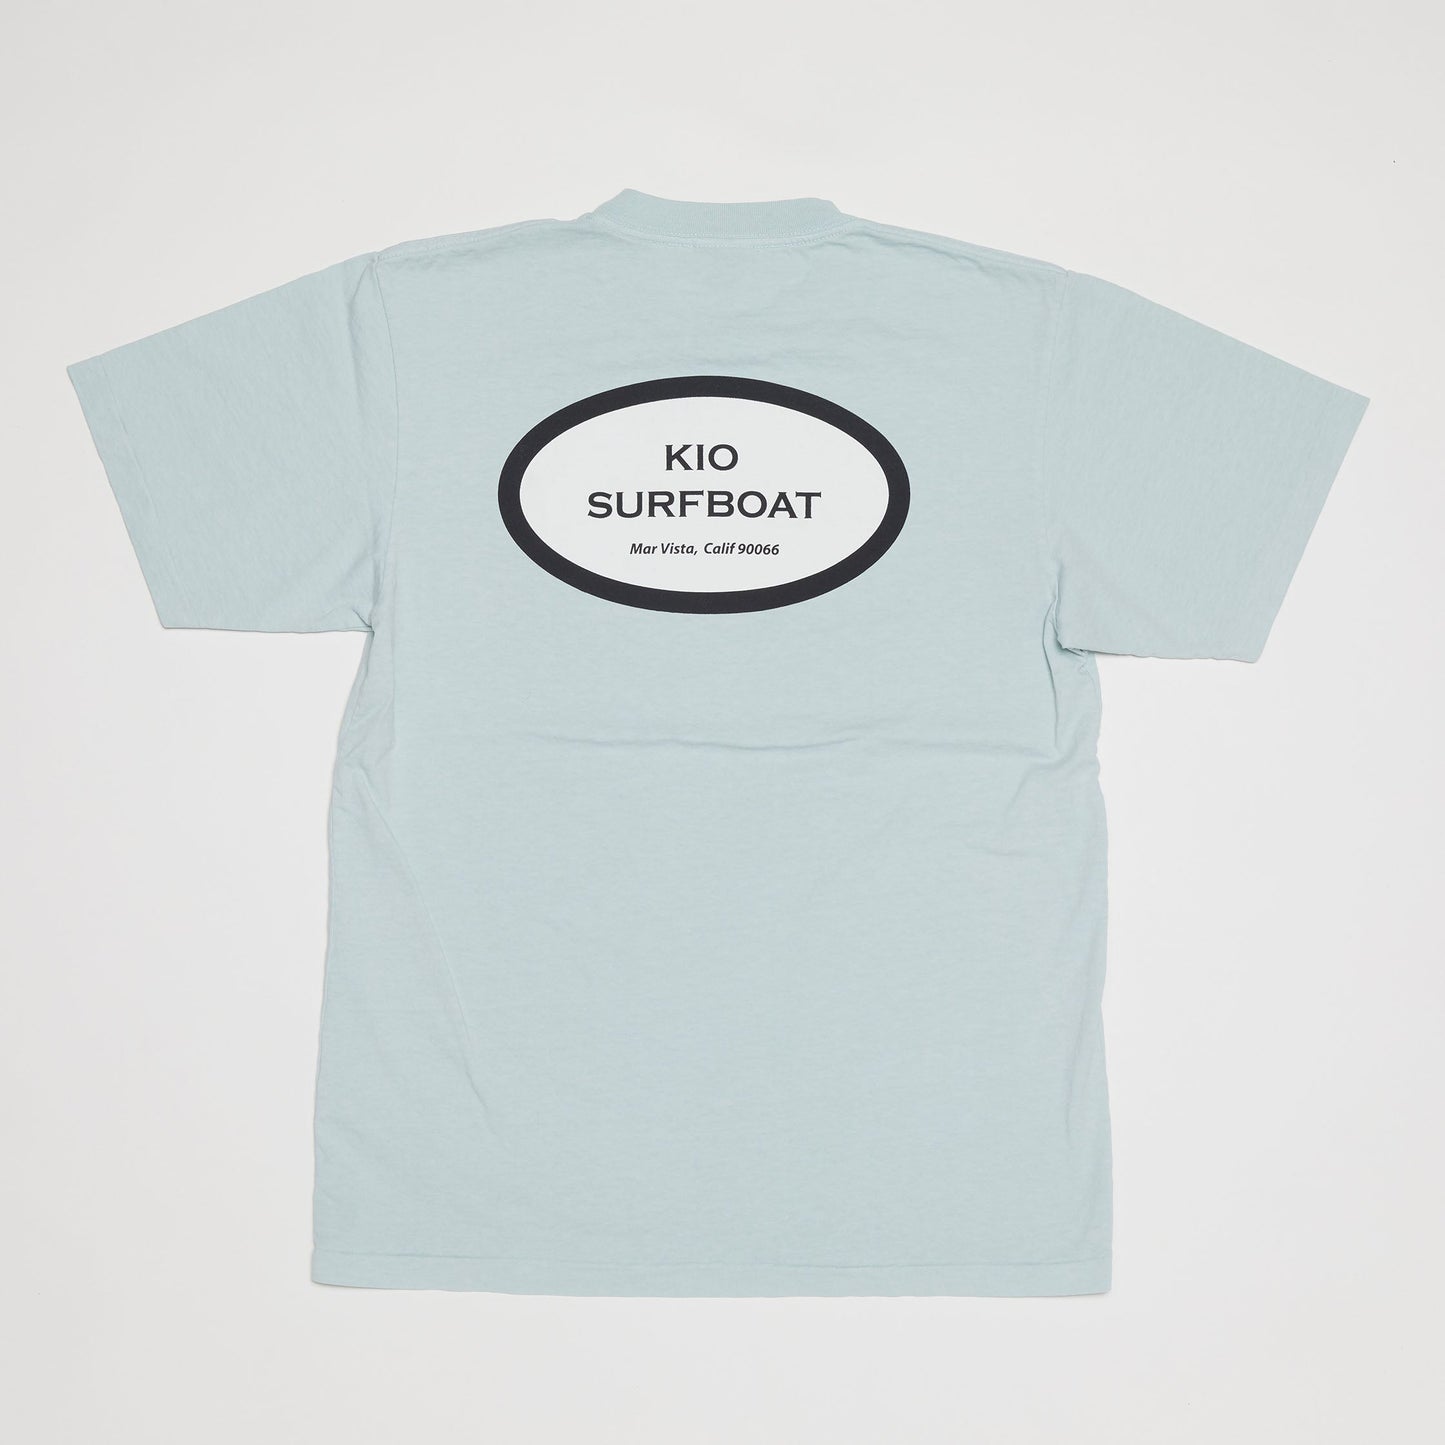 Kio Surfboat T-Shirt (Dusty Blue)